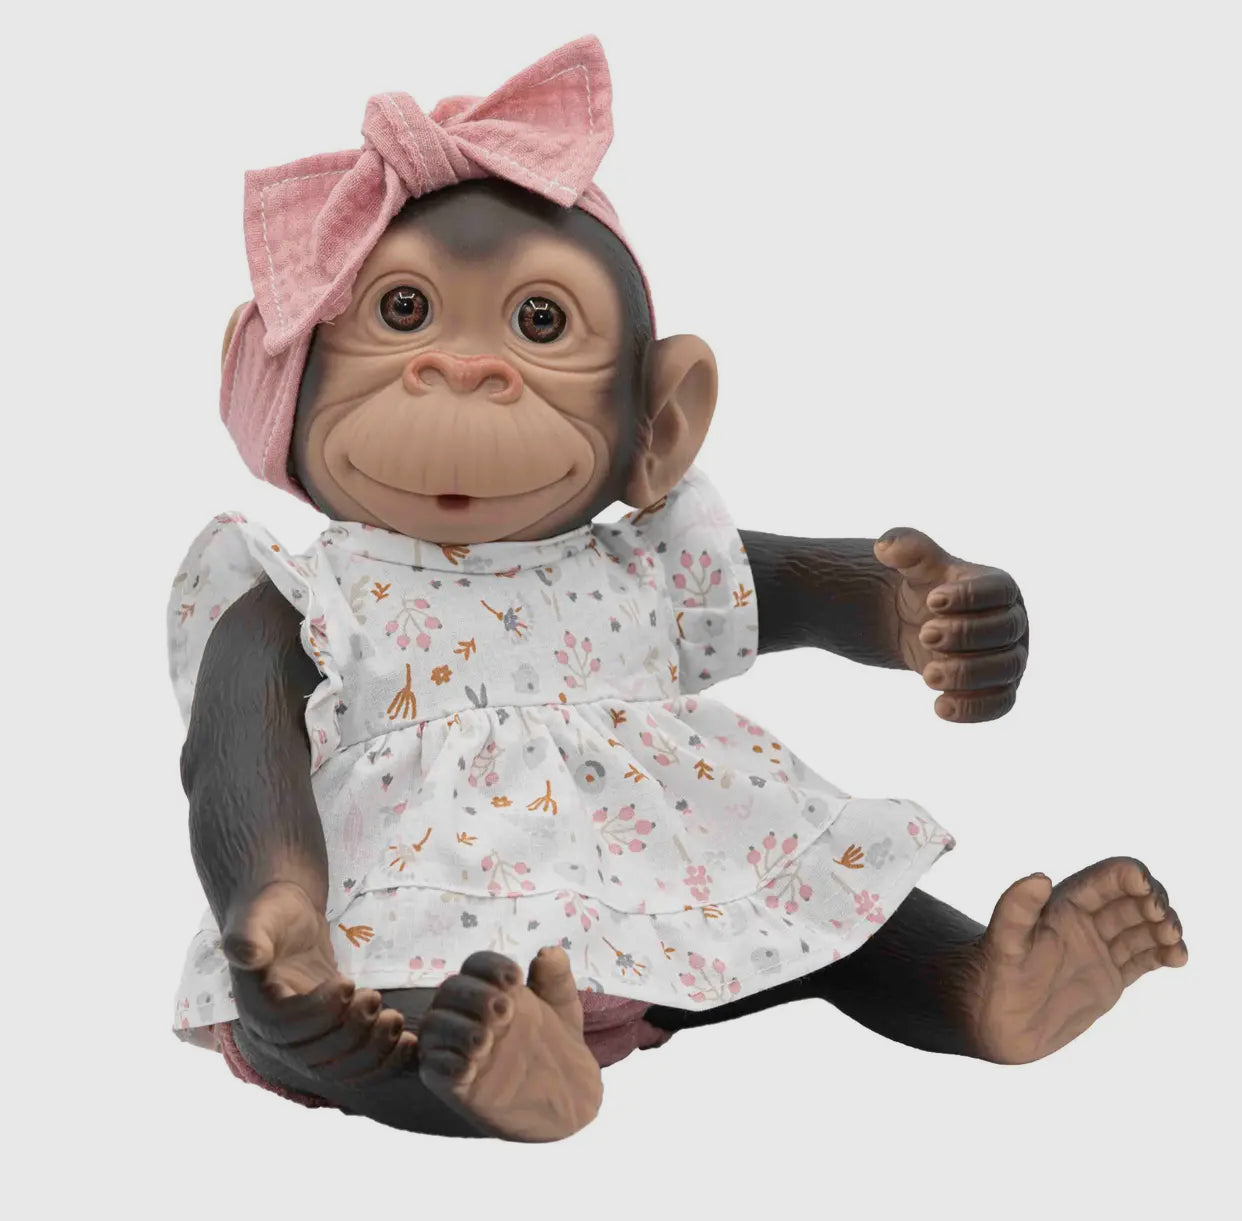 Reborn Monkey Doll 14”